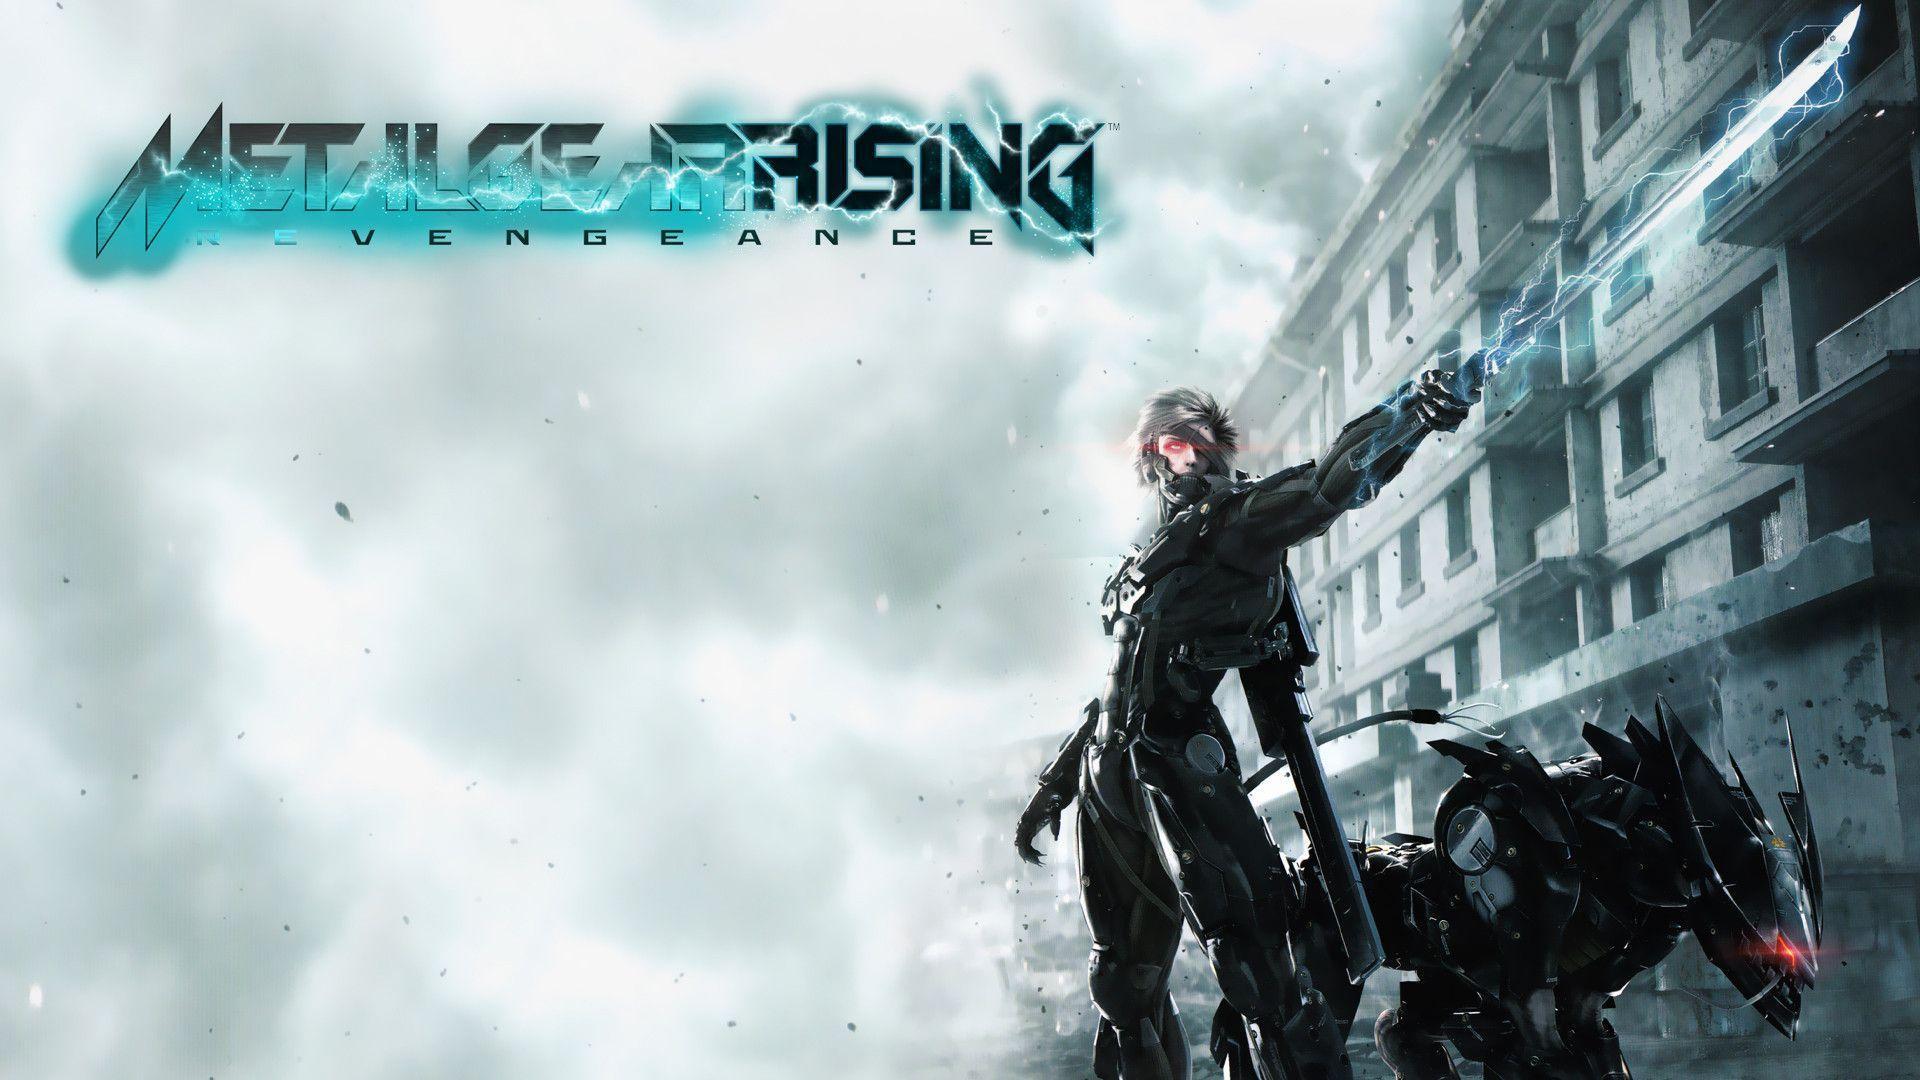 Download Metal Gear Rising Revengeance Wallpaper 1920 X 1080 6552